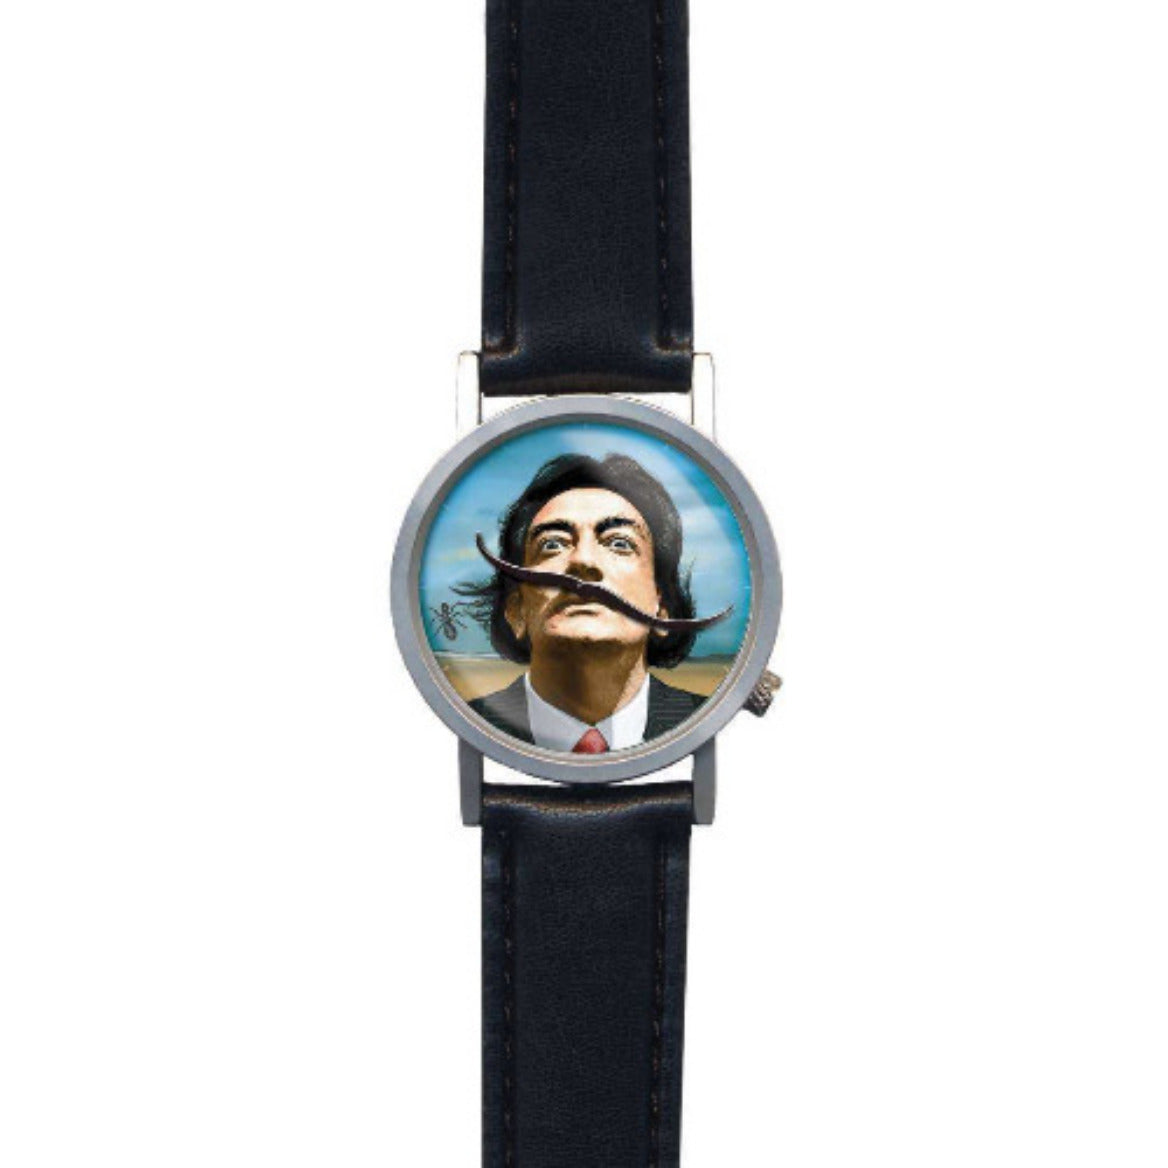 Dalí Watch w/ Spinning Mustache Hands